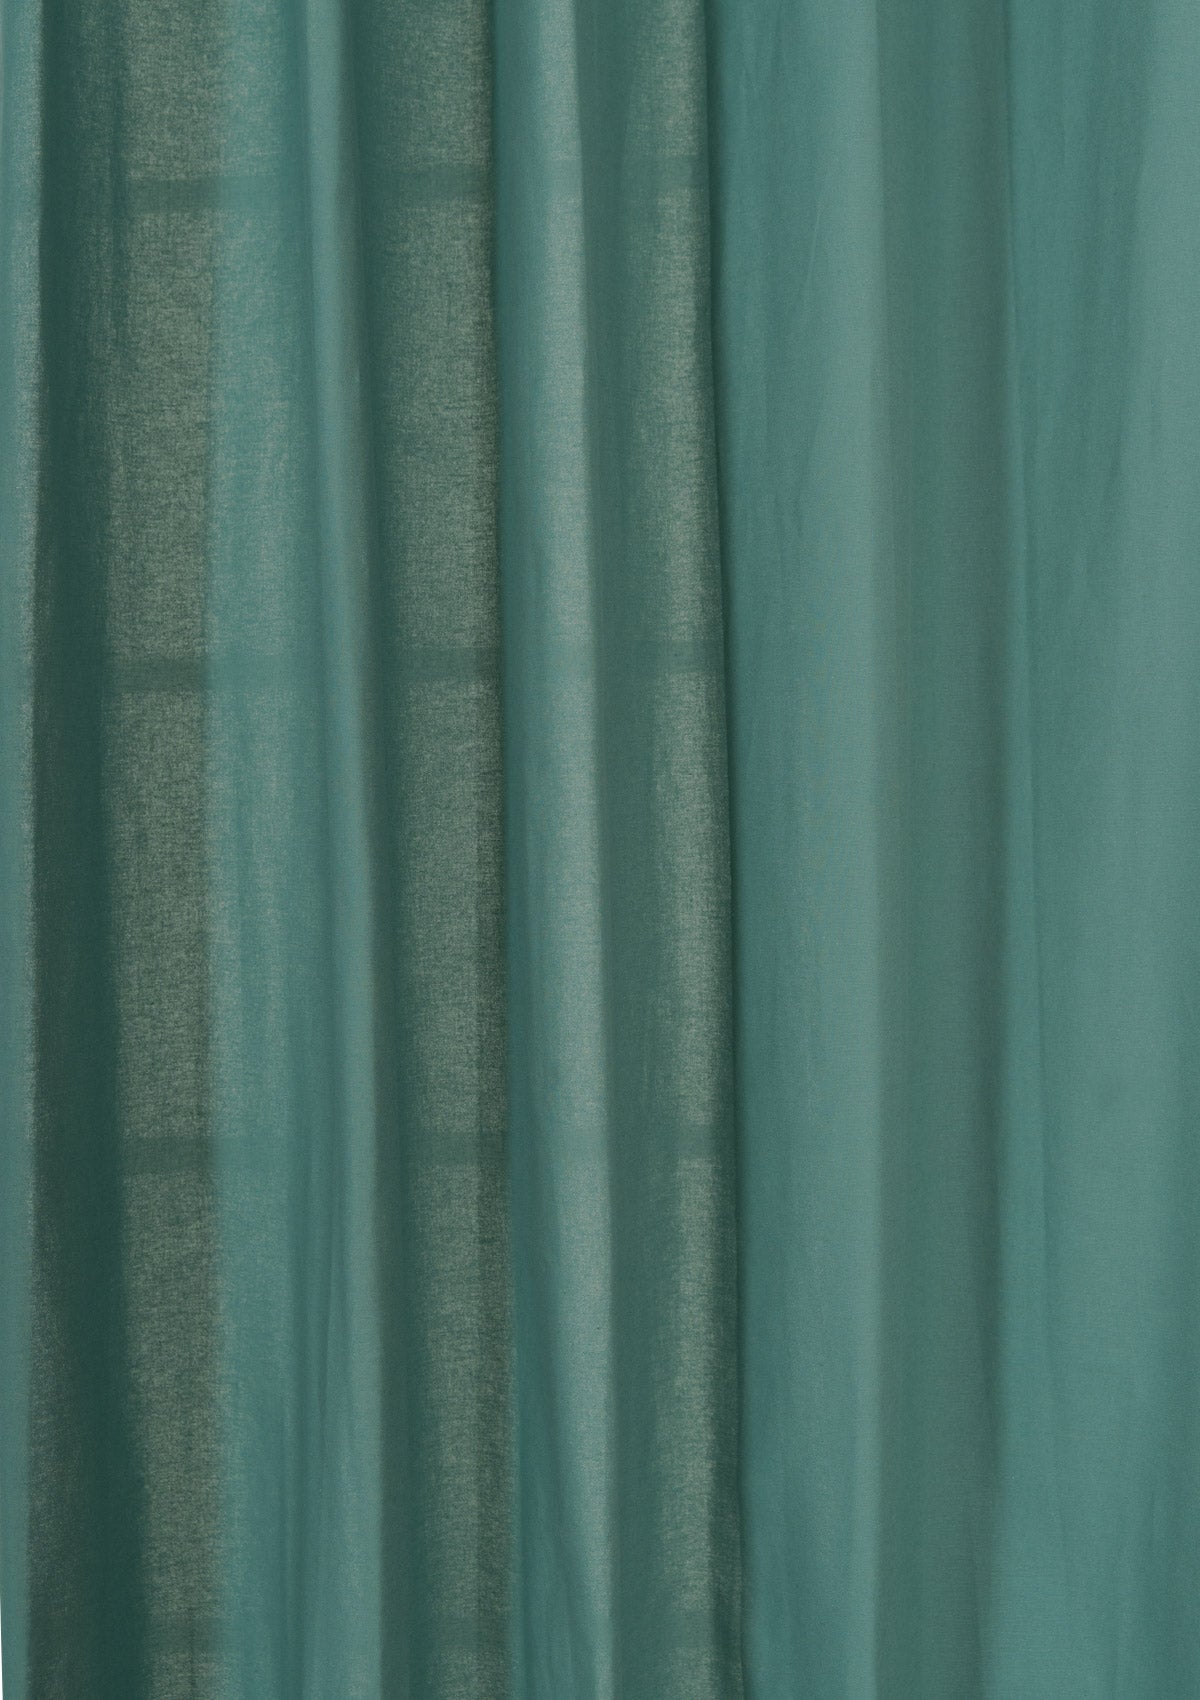 Solid aqua blue 100% cotton plain customisable curtain for bedroom - Room darkening